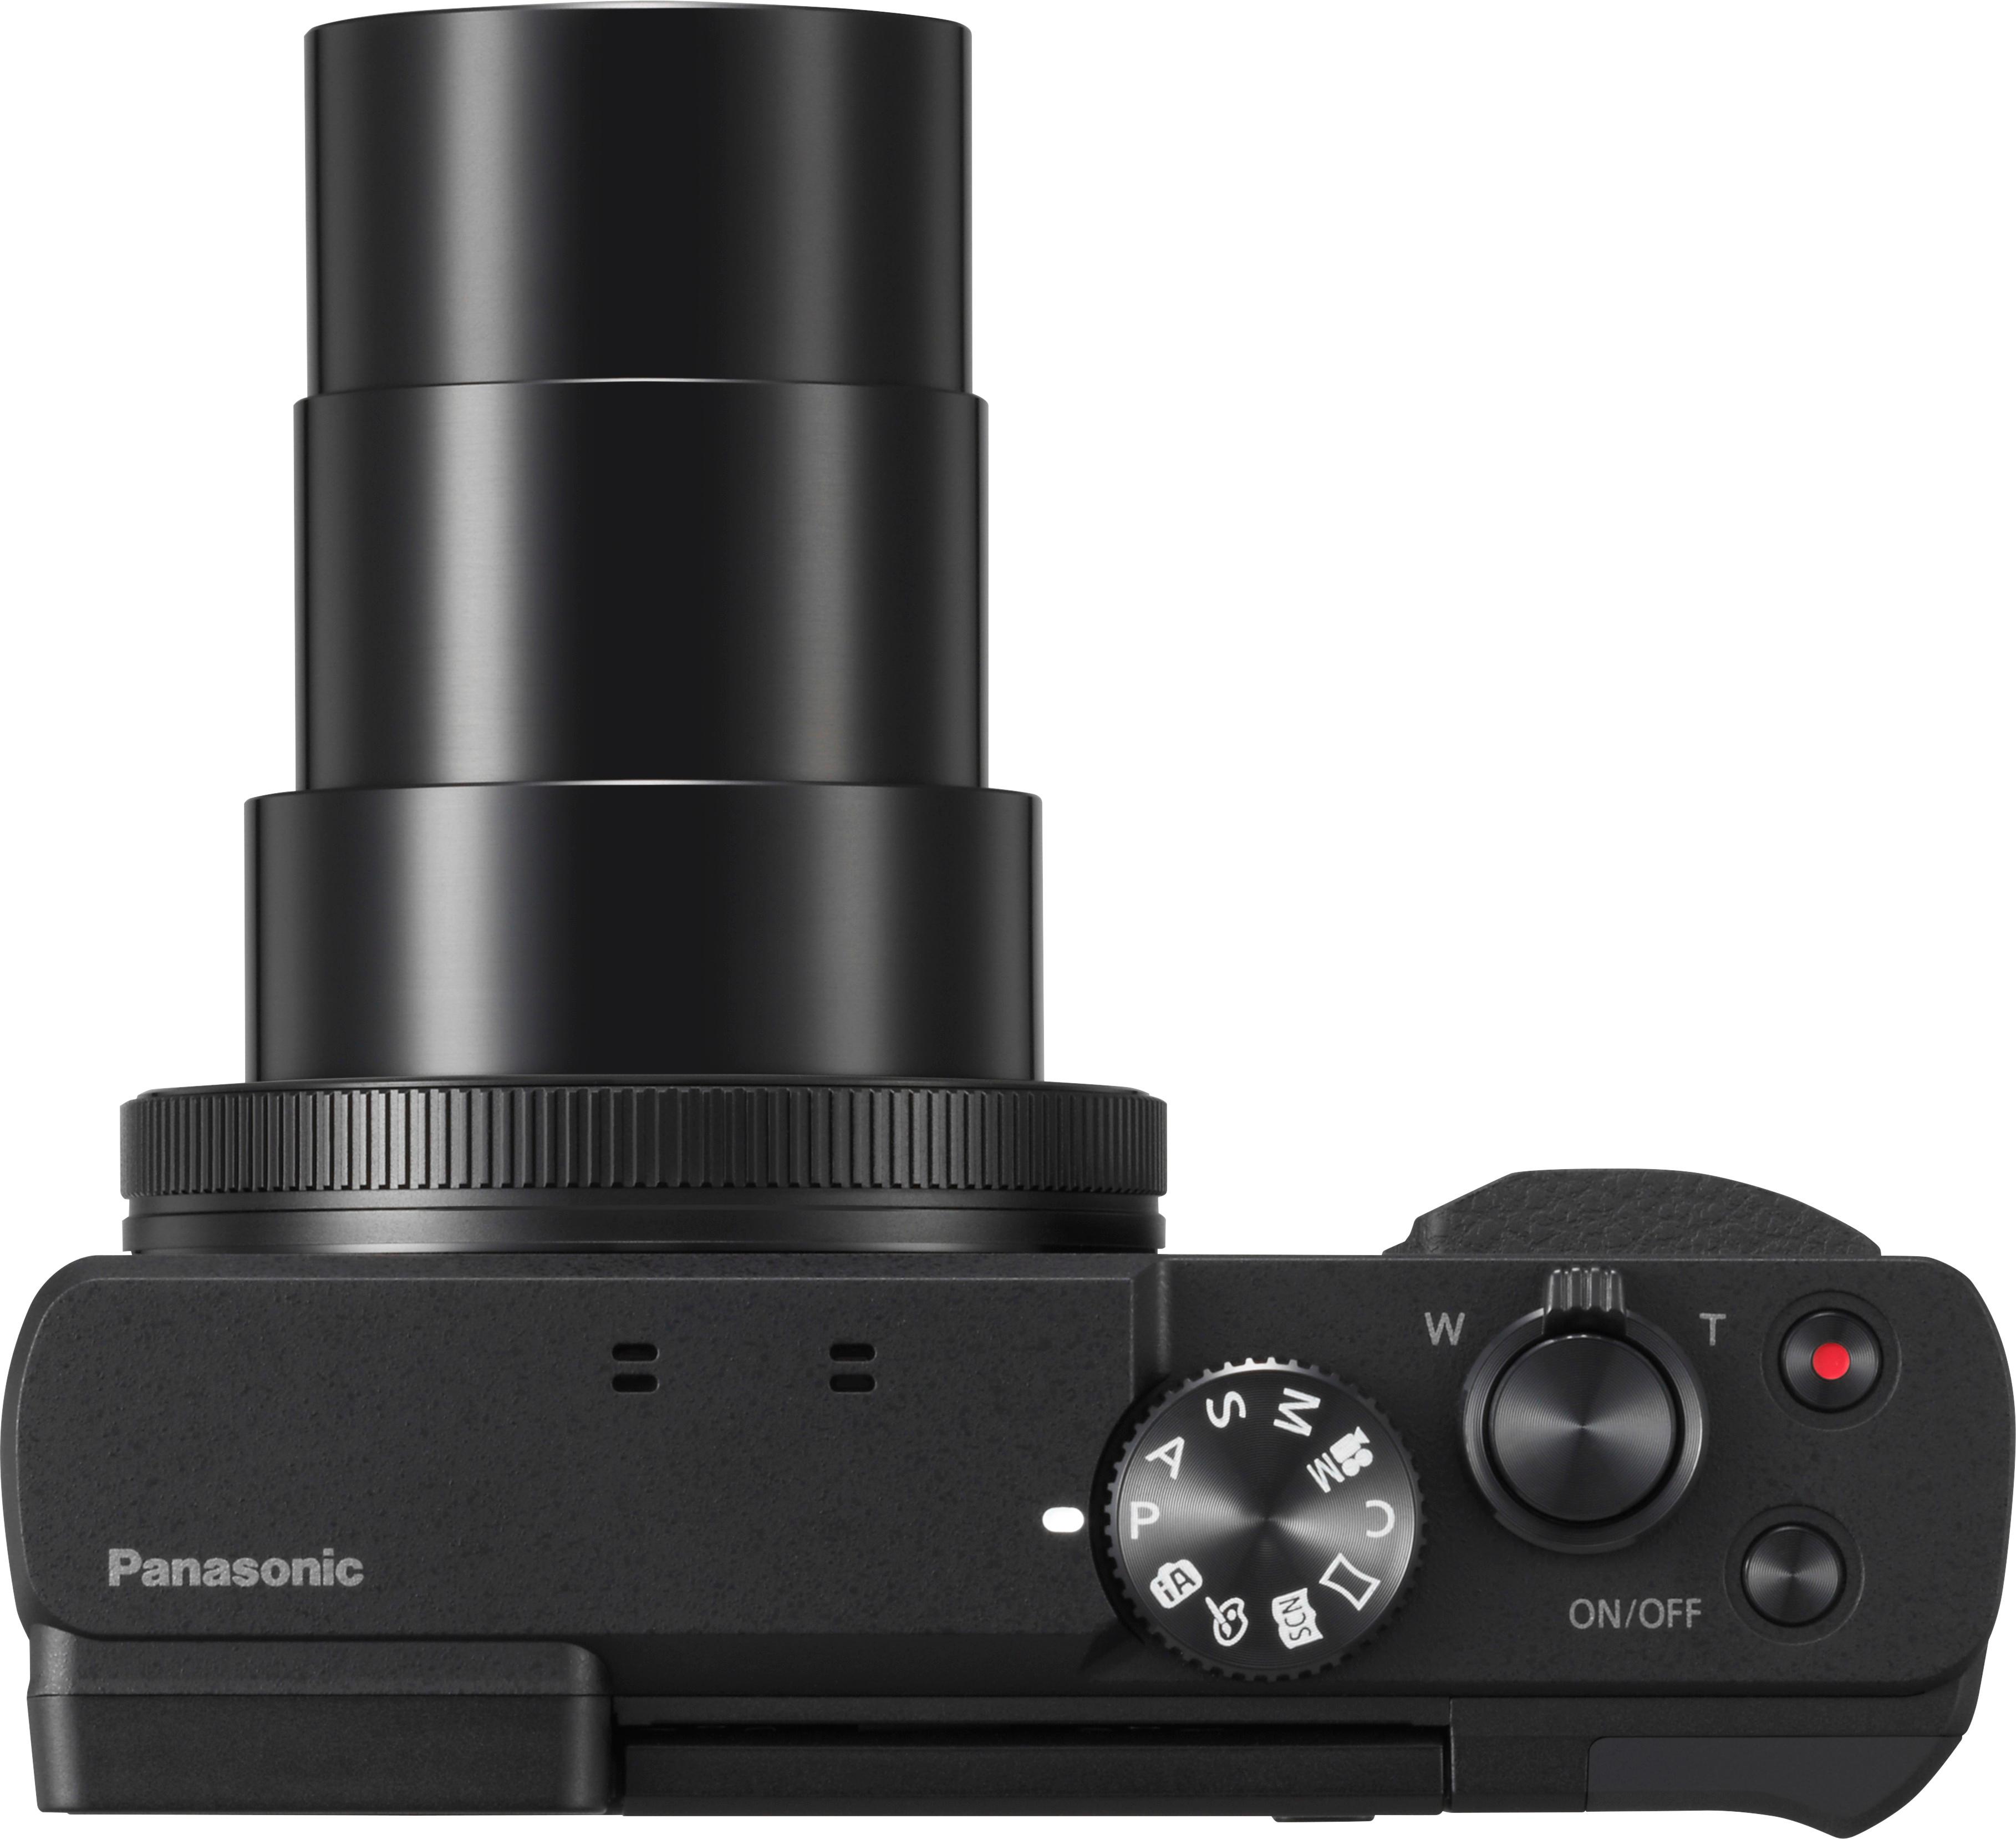 dennenboom Savant Vergelijken Best Buy: Panasonic LUMIX DC-ZS70 20.3-Megapixel Digital Camera Black DC -ZS70K